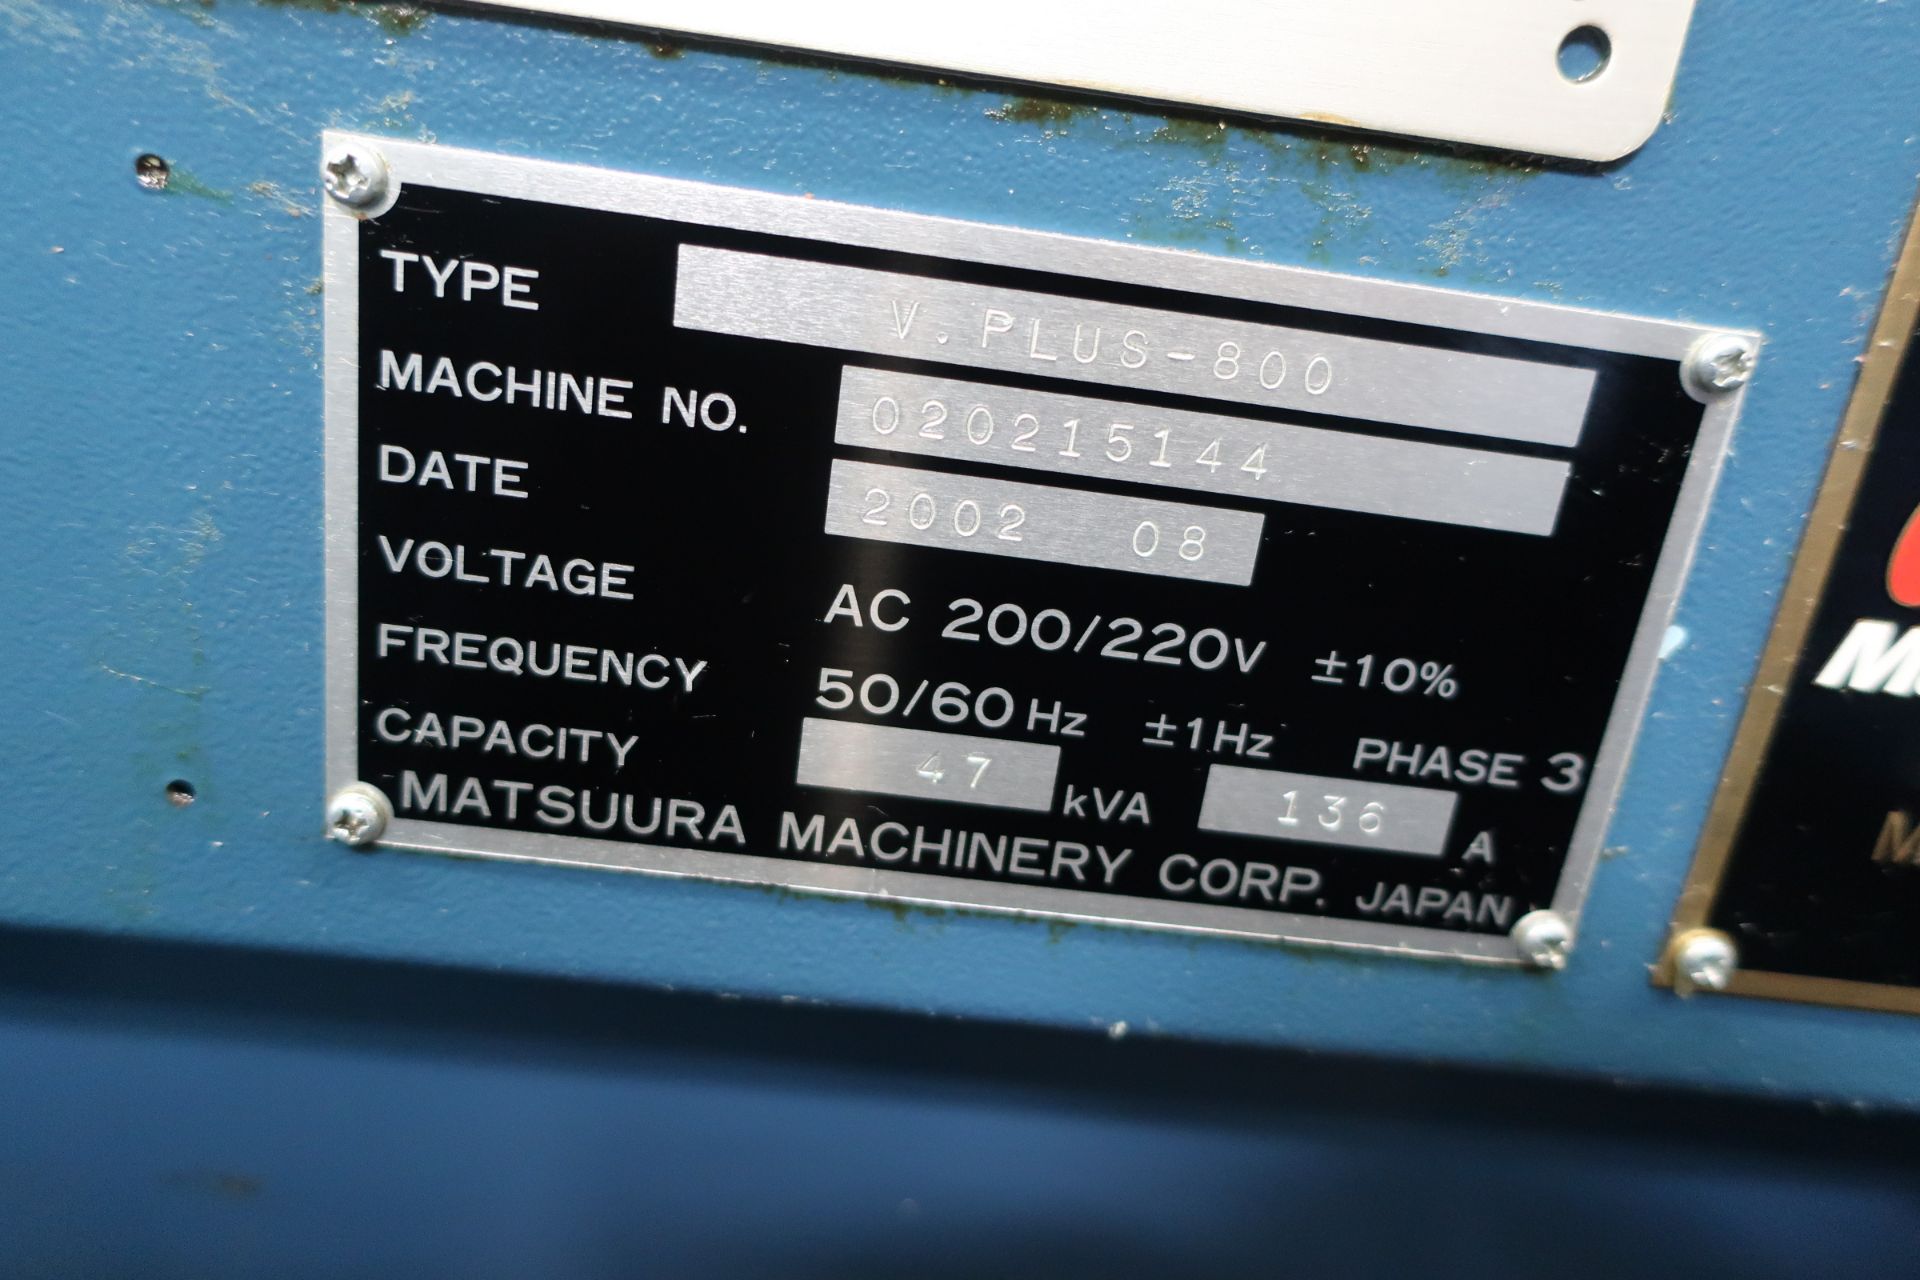 2002 Matsuura V.Plus-800 CNC Vertical Machining Center, SN 020215144 - Image 11 of 11